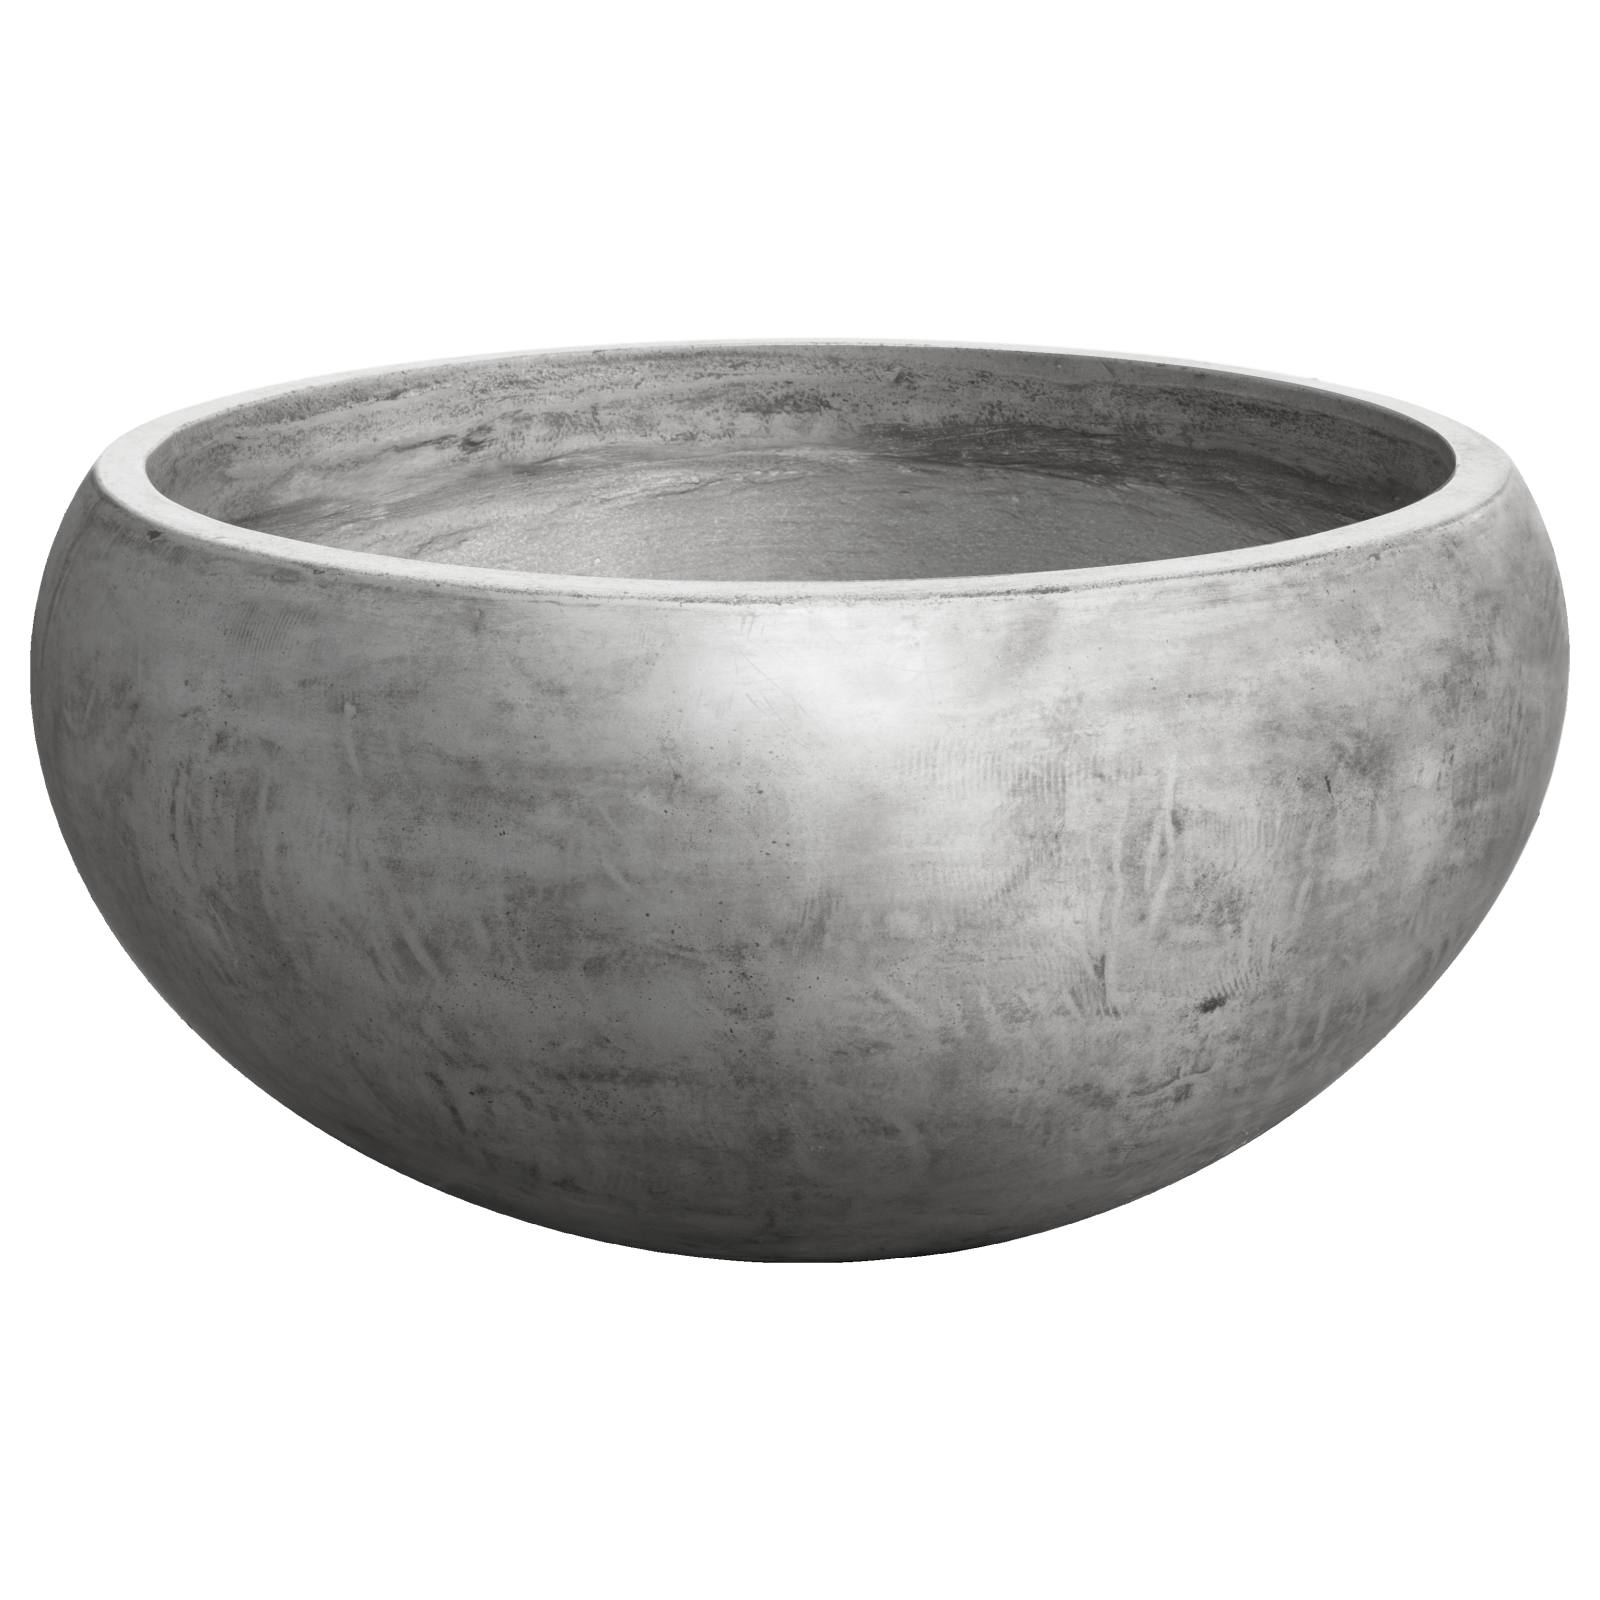 Lido 66x33cm Polished Concrete Planter Bowl, Dark Grey